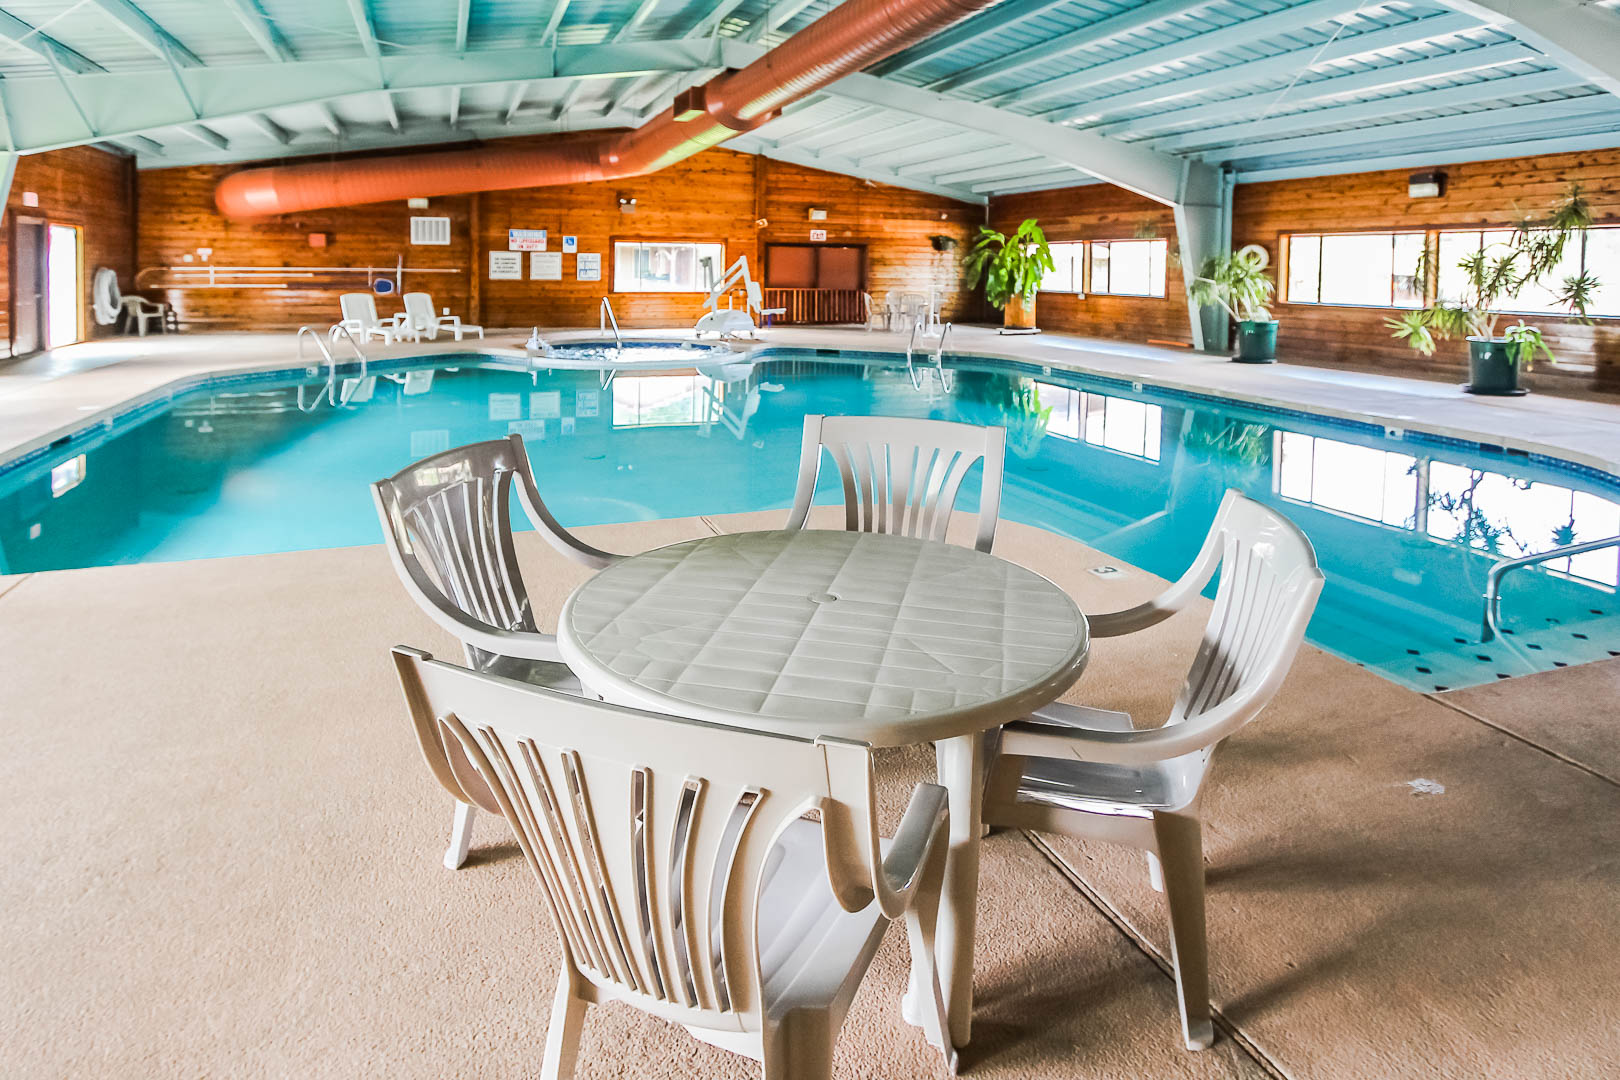 A spacious indoor swimming pool at VRI's Roundhouse Resort in Pinetop, Arizona.